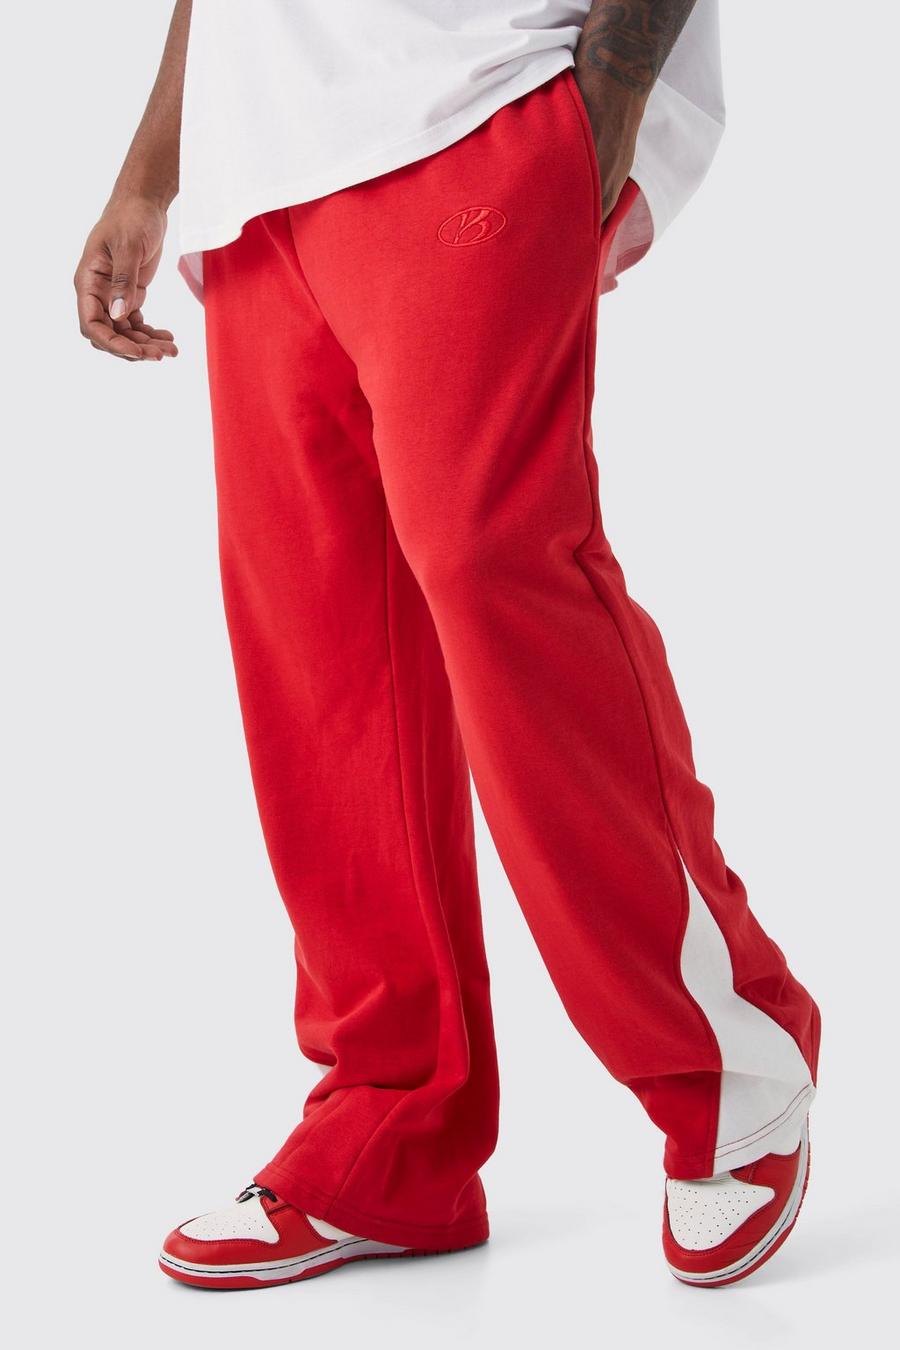 Pantalón deportivo Plus Regular grueso con refuerzos sin acabar, Red rojo